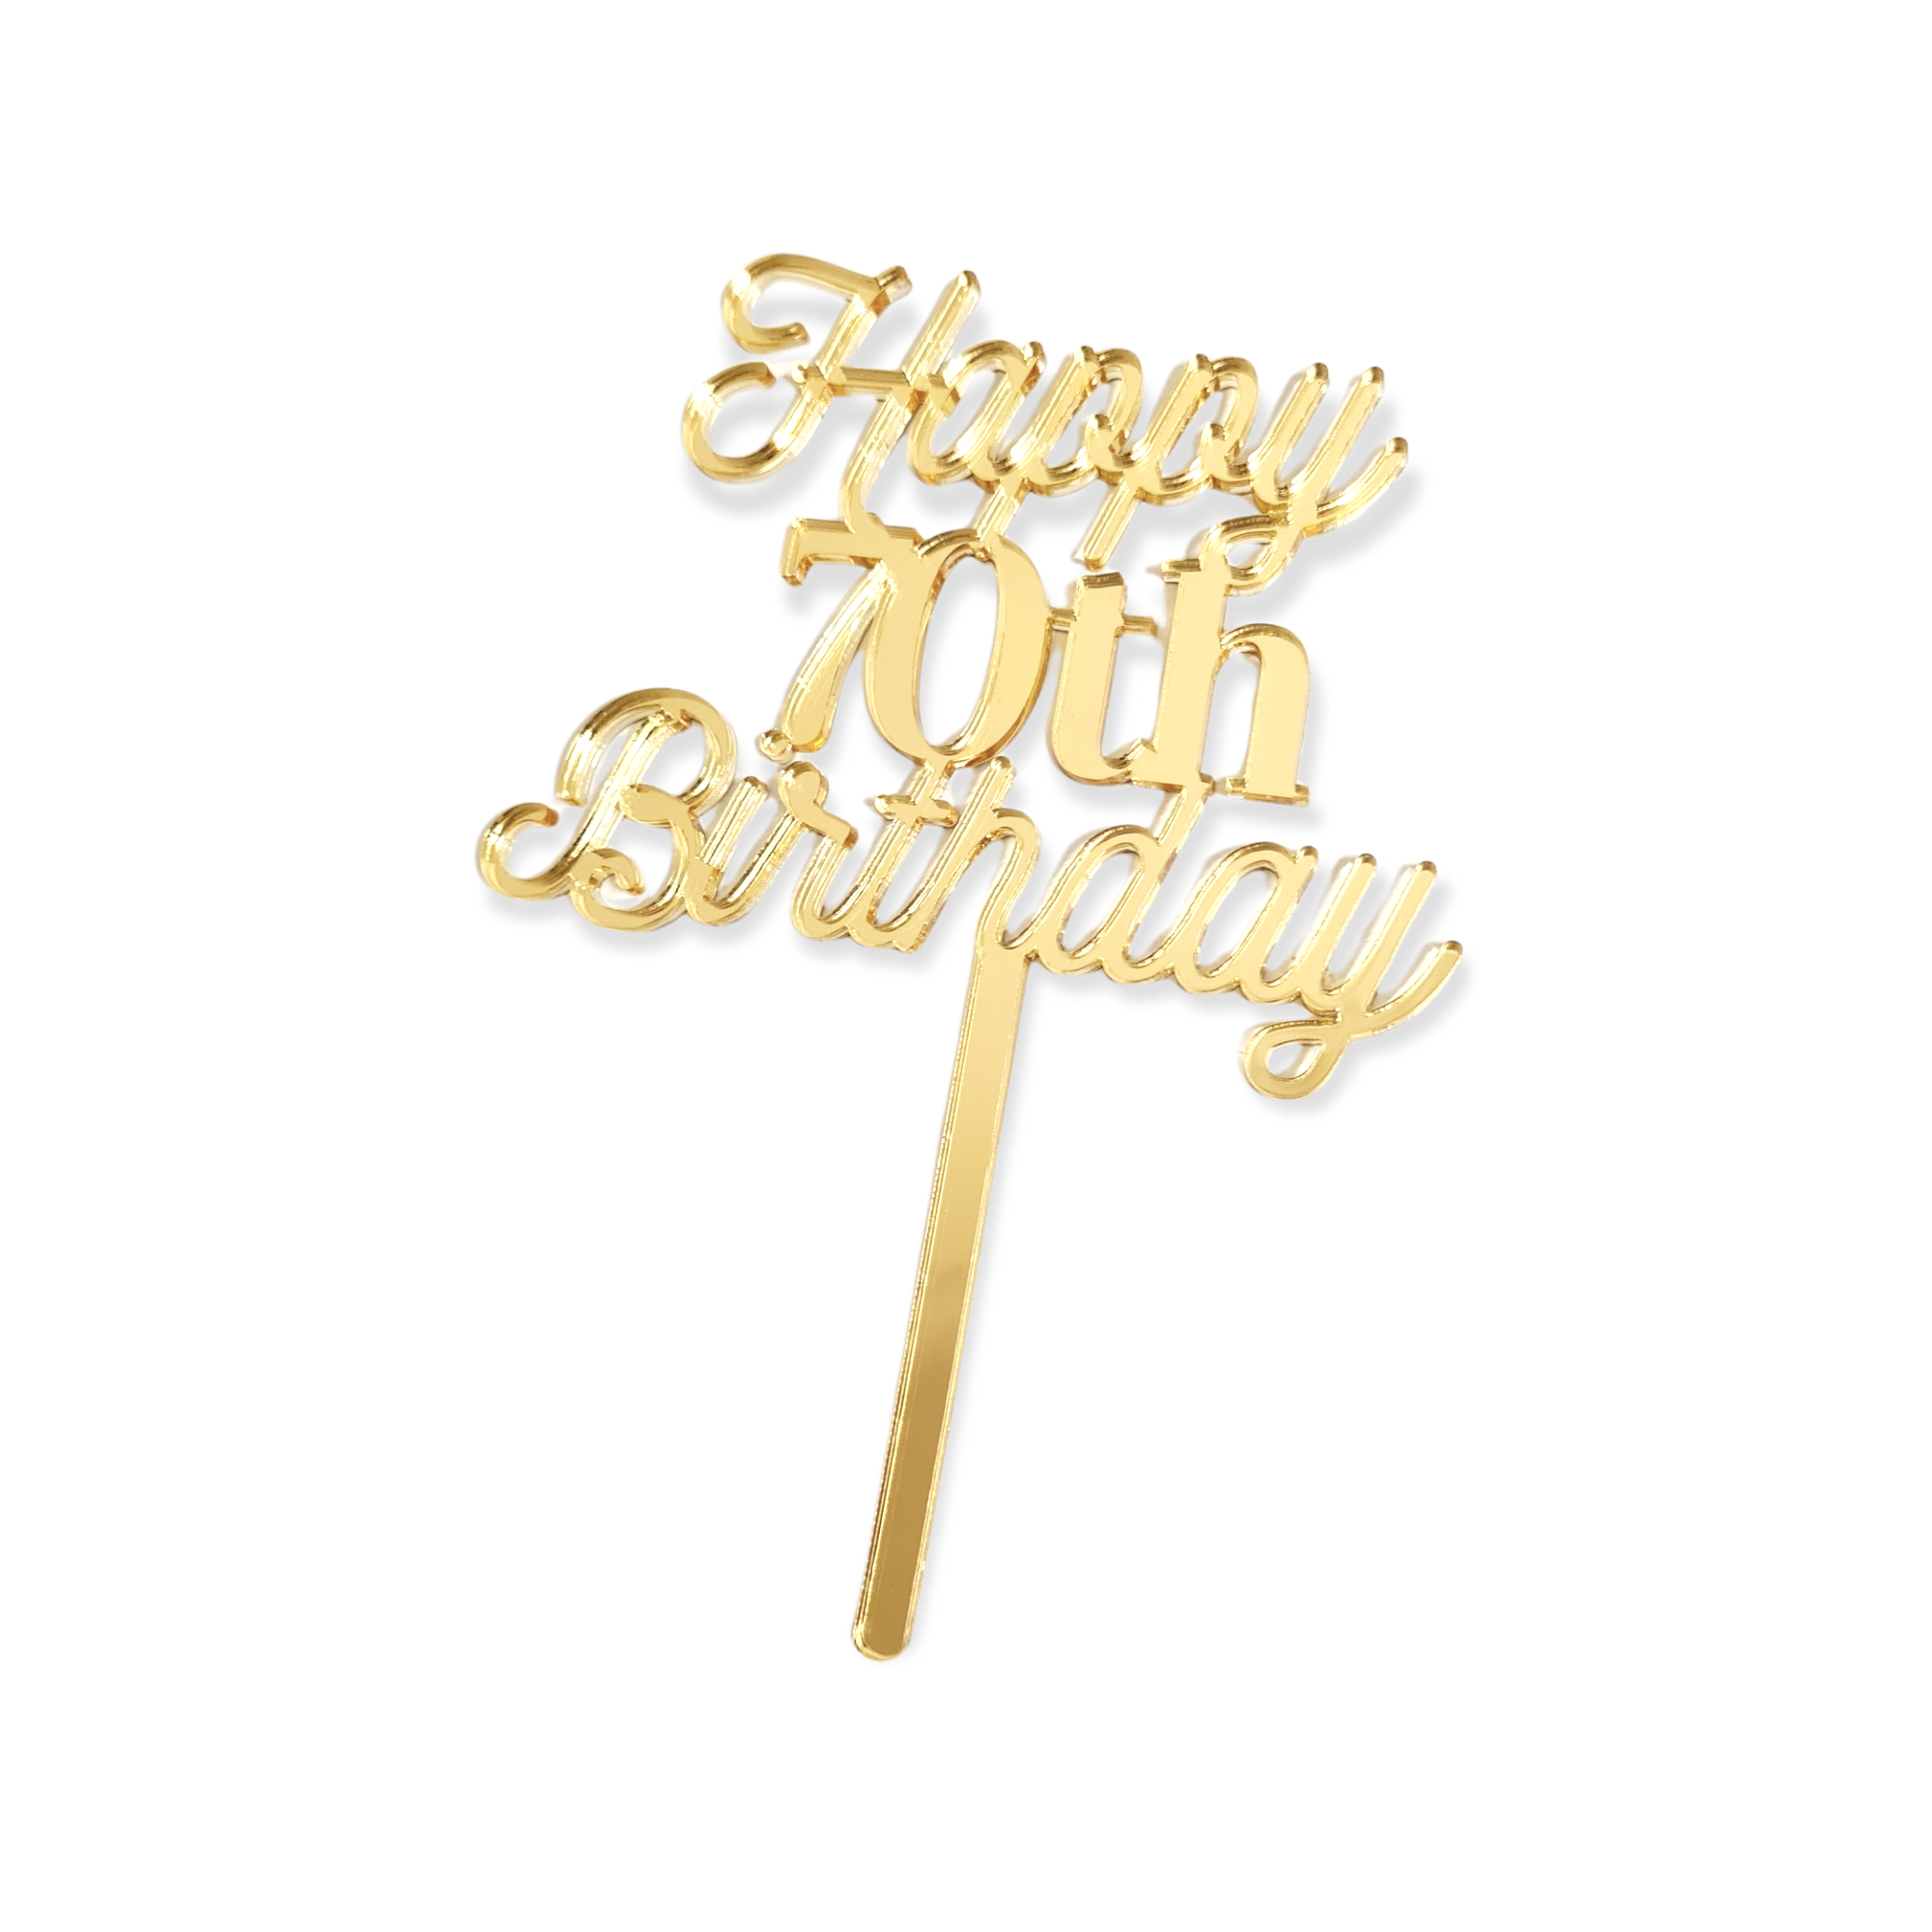 70th Birthday Cake Toppers - Happy 70th Birthday Cake Decorations Australia